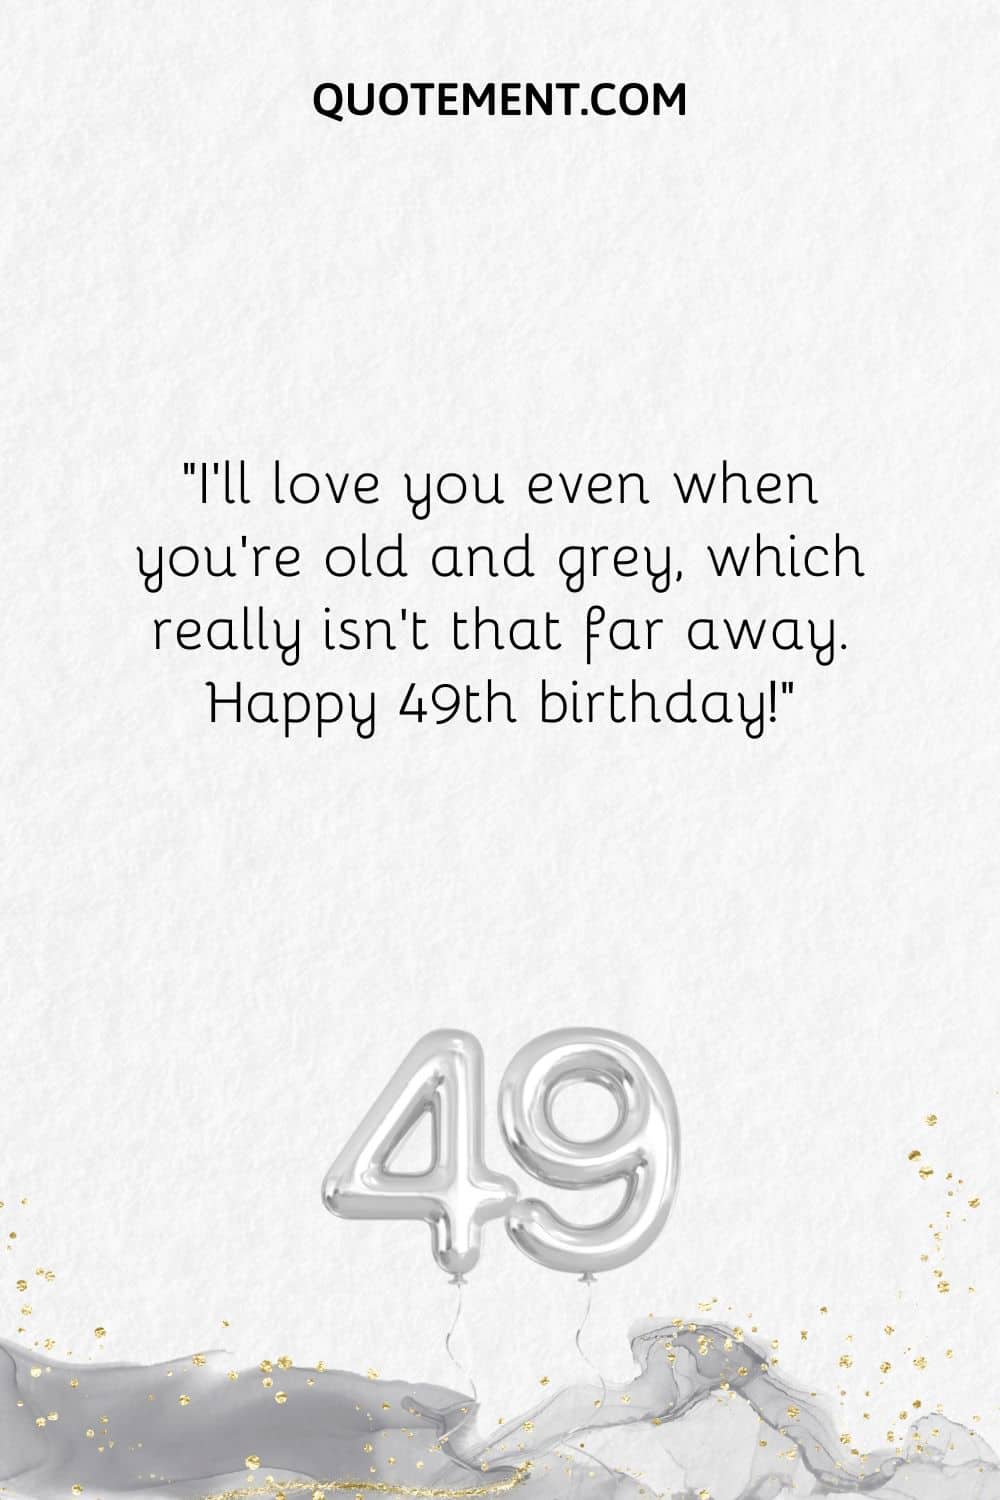 Happy 49th birthday